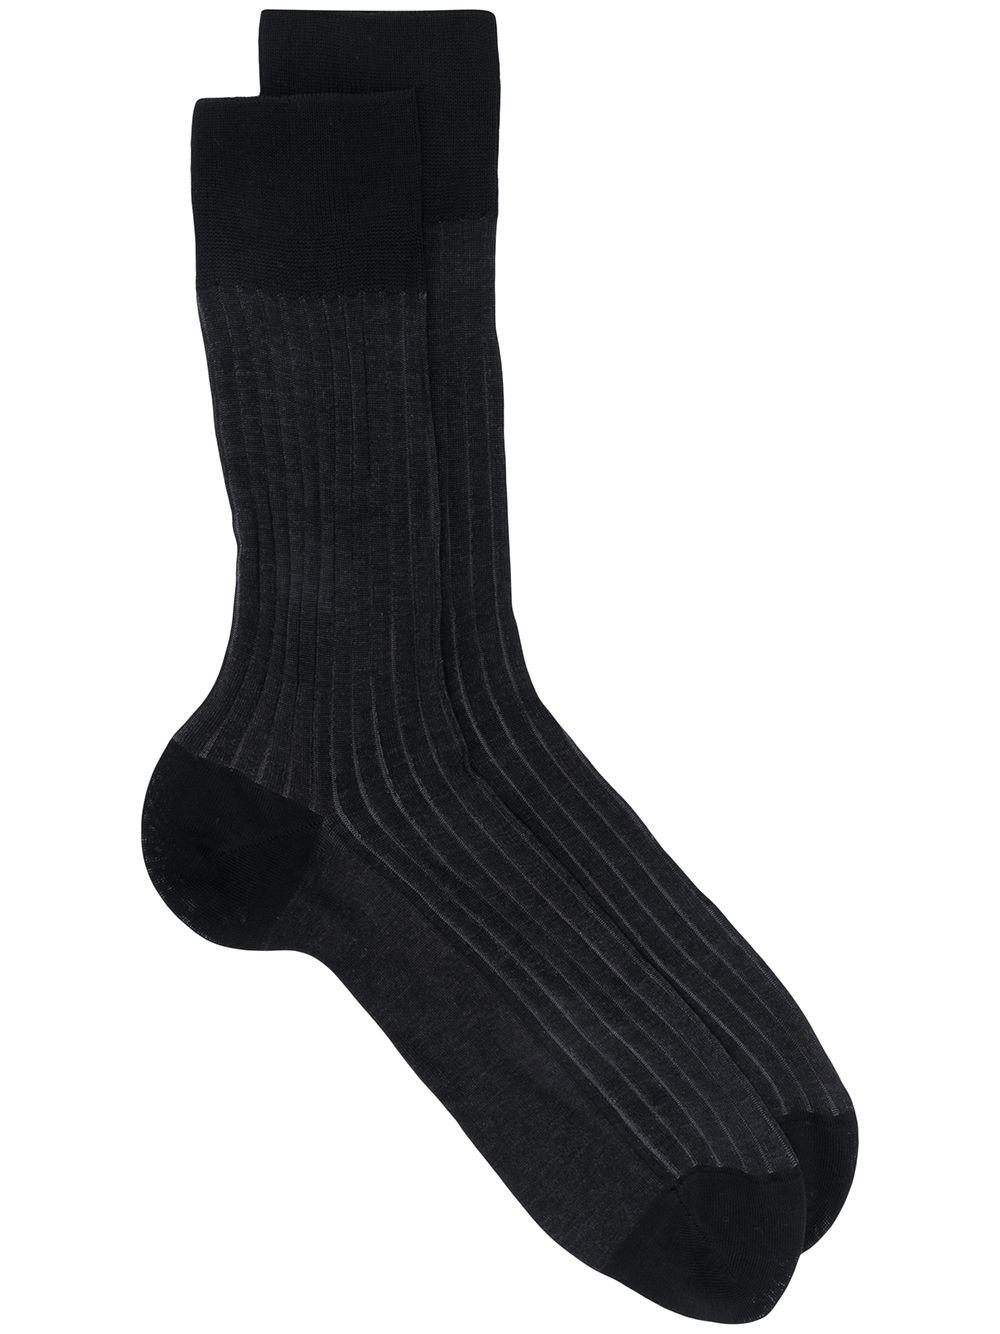 Falke Cotton Shadow Ribbed Socks in Black for Men - Lyst